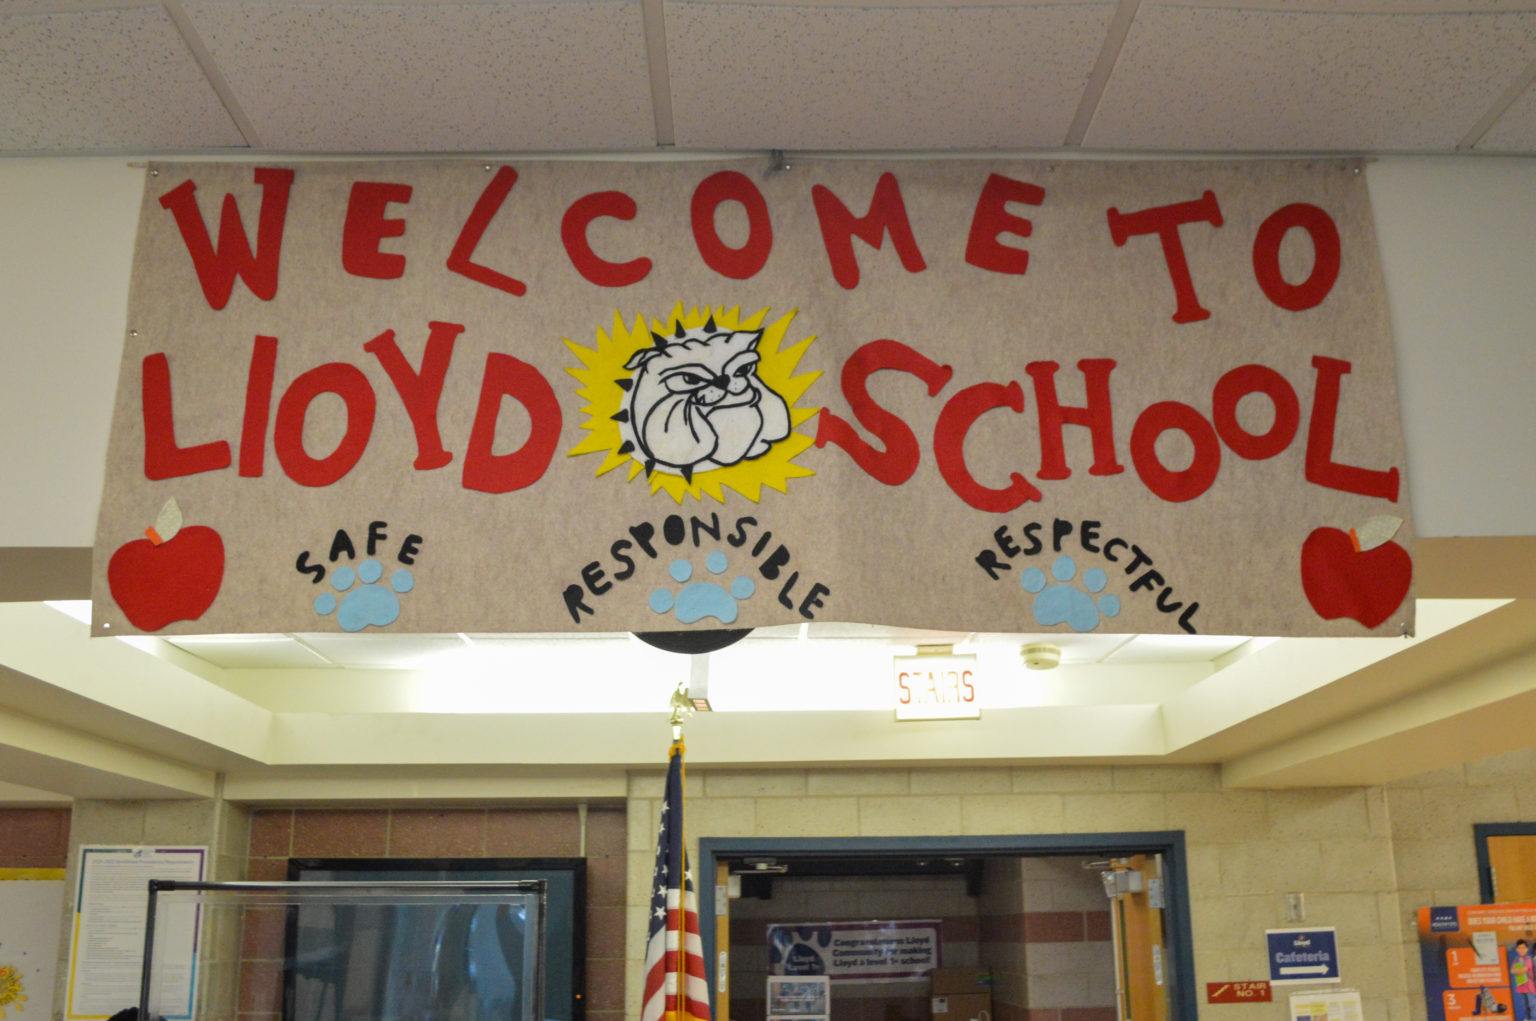 Welcome to Lloyd School